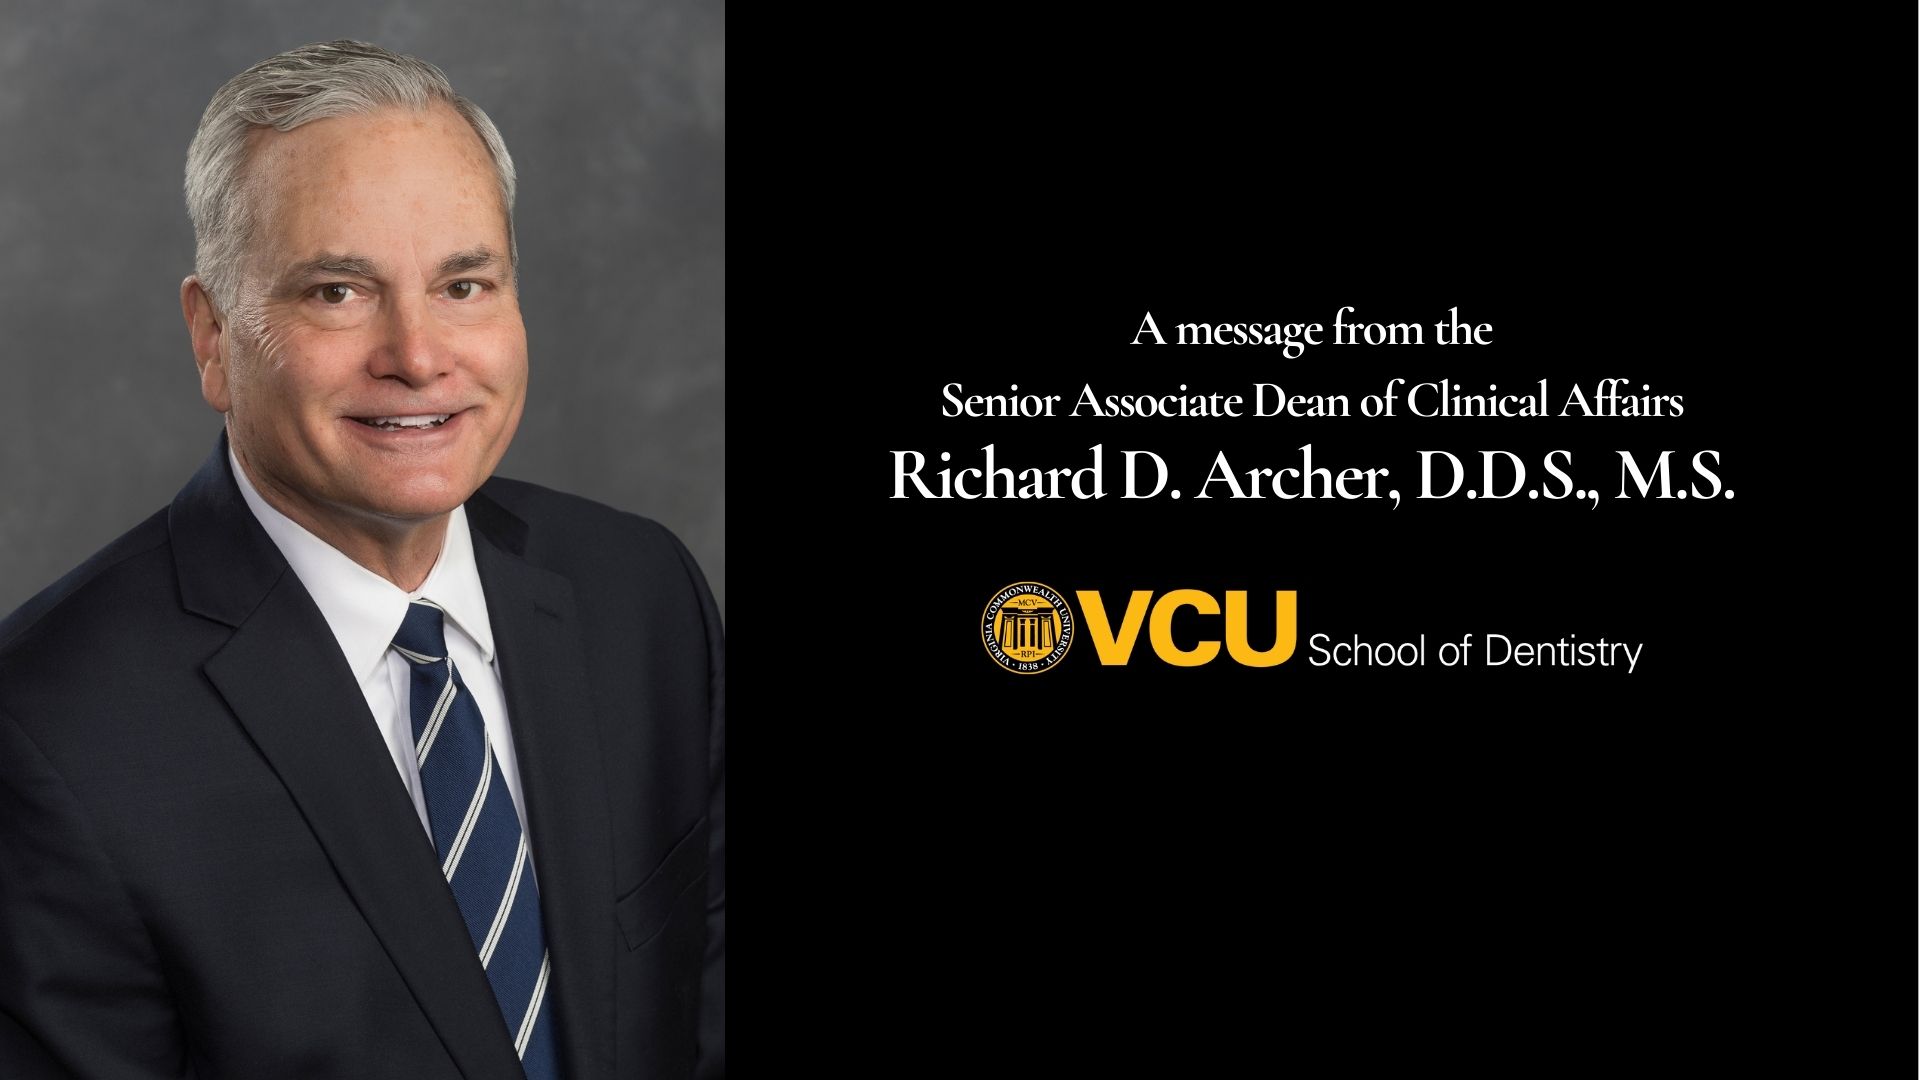 Richard D. Archer